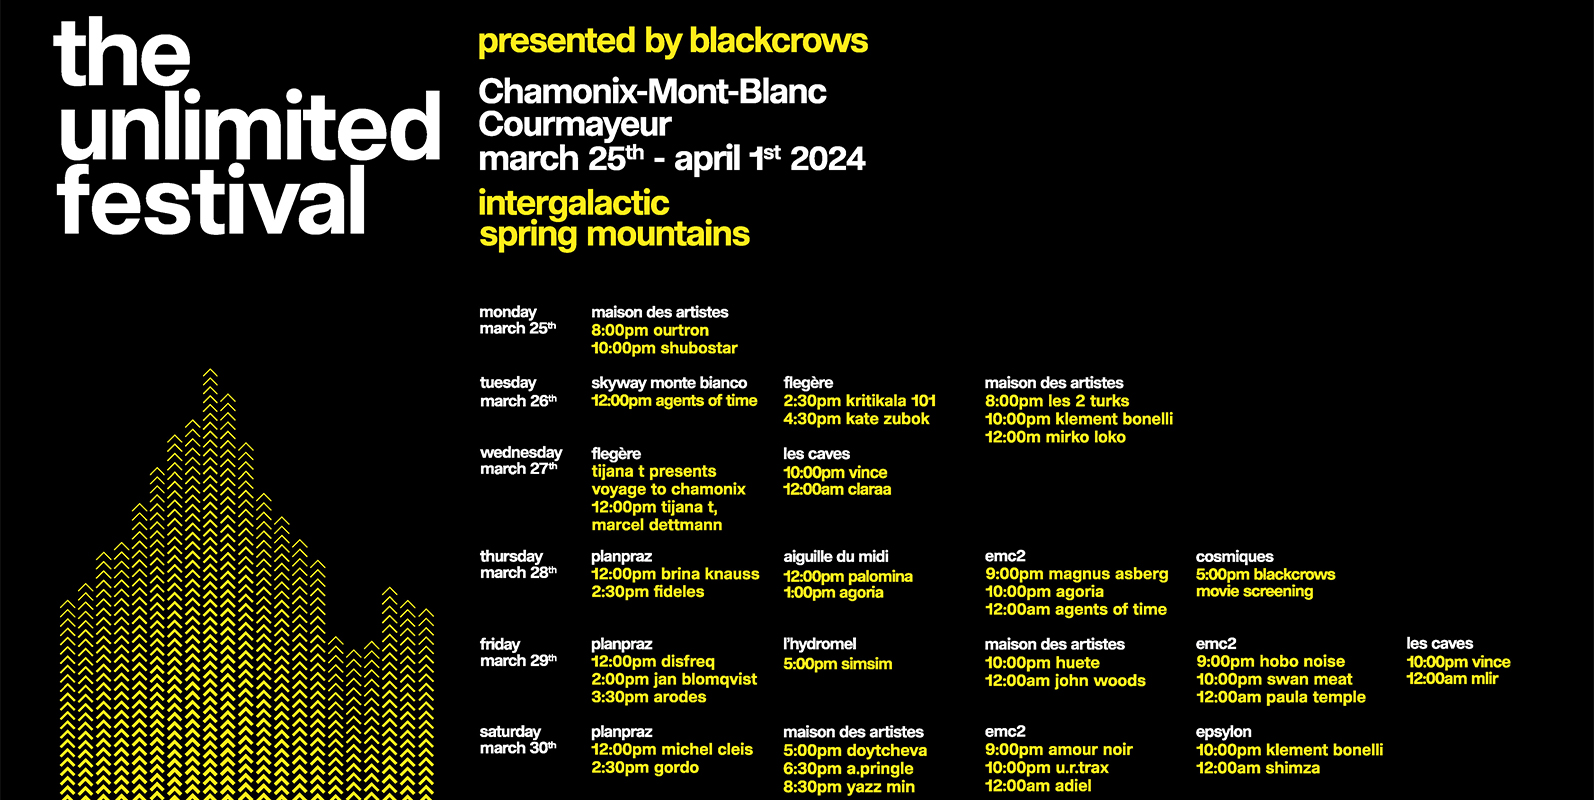 The Unlimited Festival 2024 du lundi 25 mars au lundi 1er avril 2024 à Chamonix-Mont-Blanc.